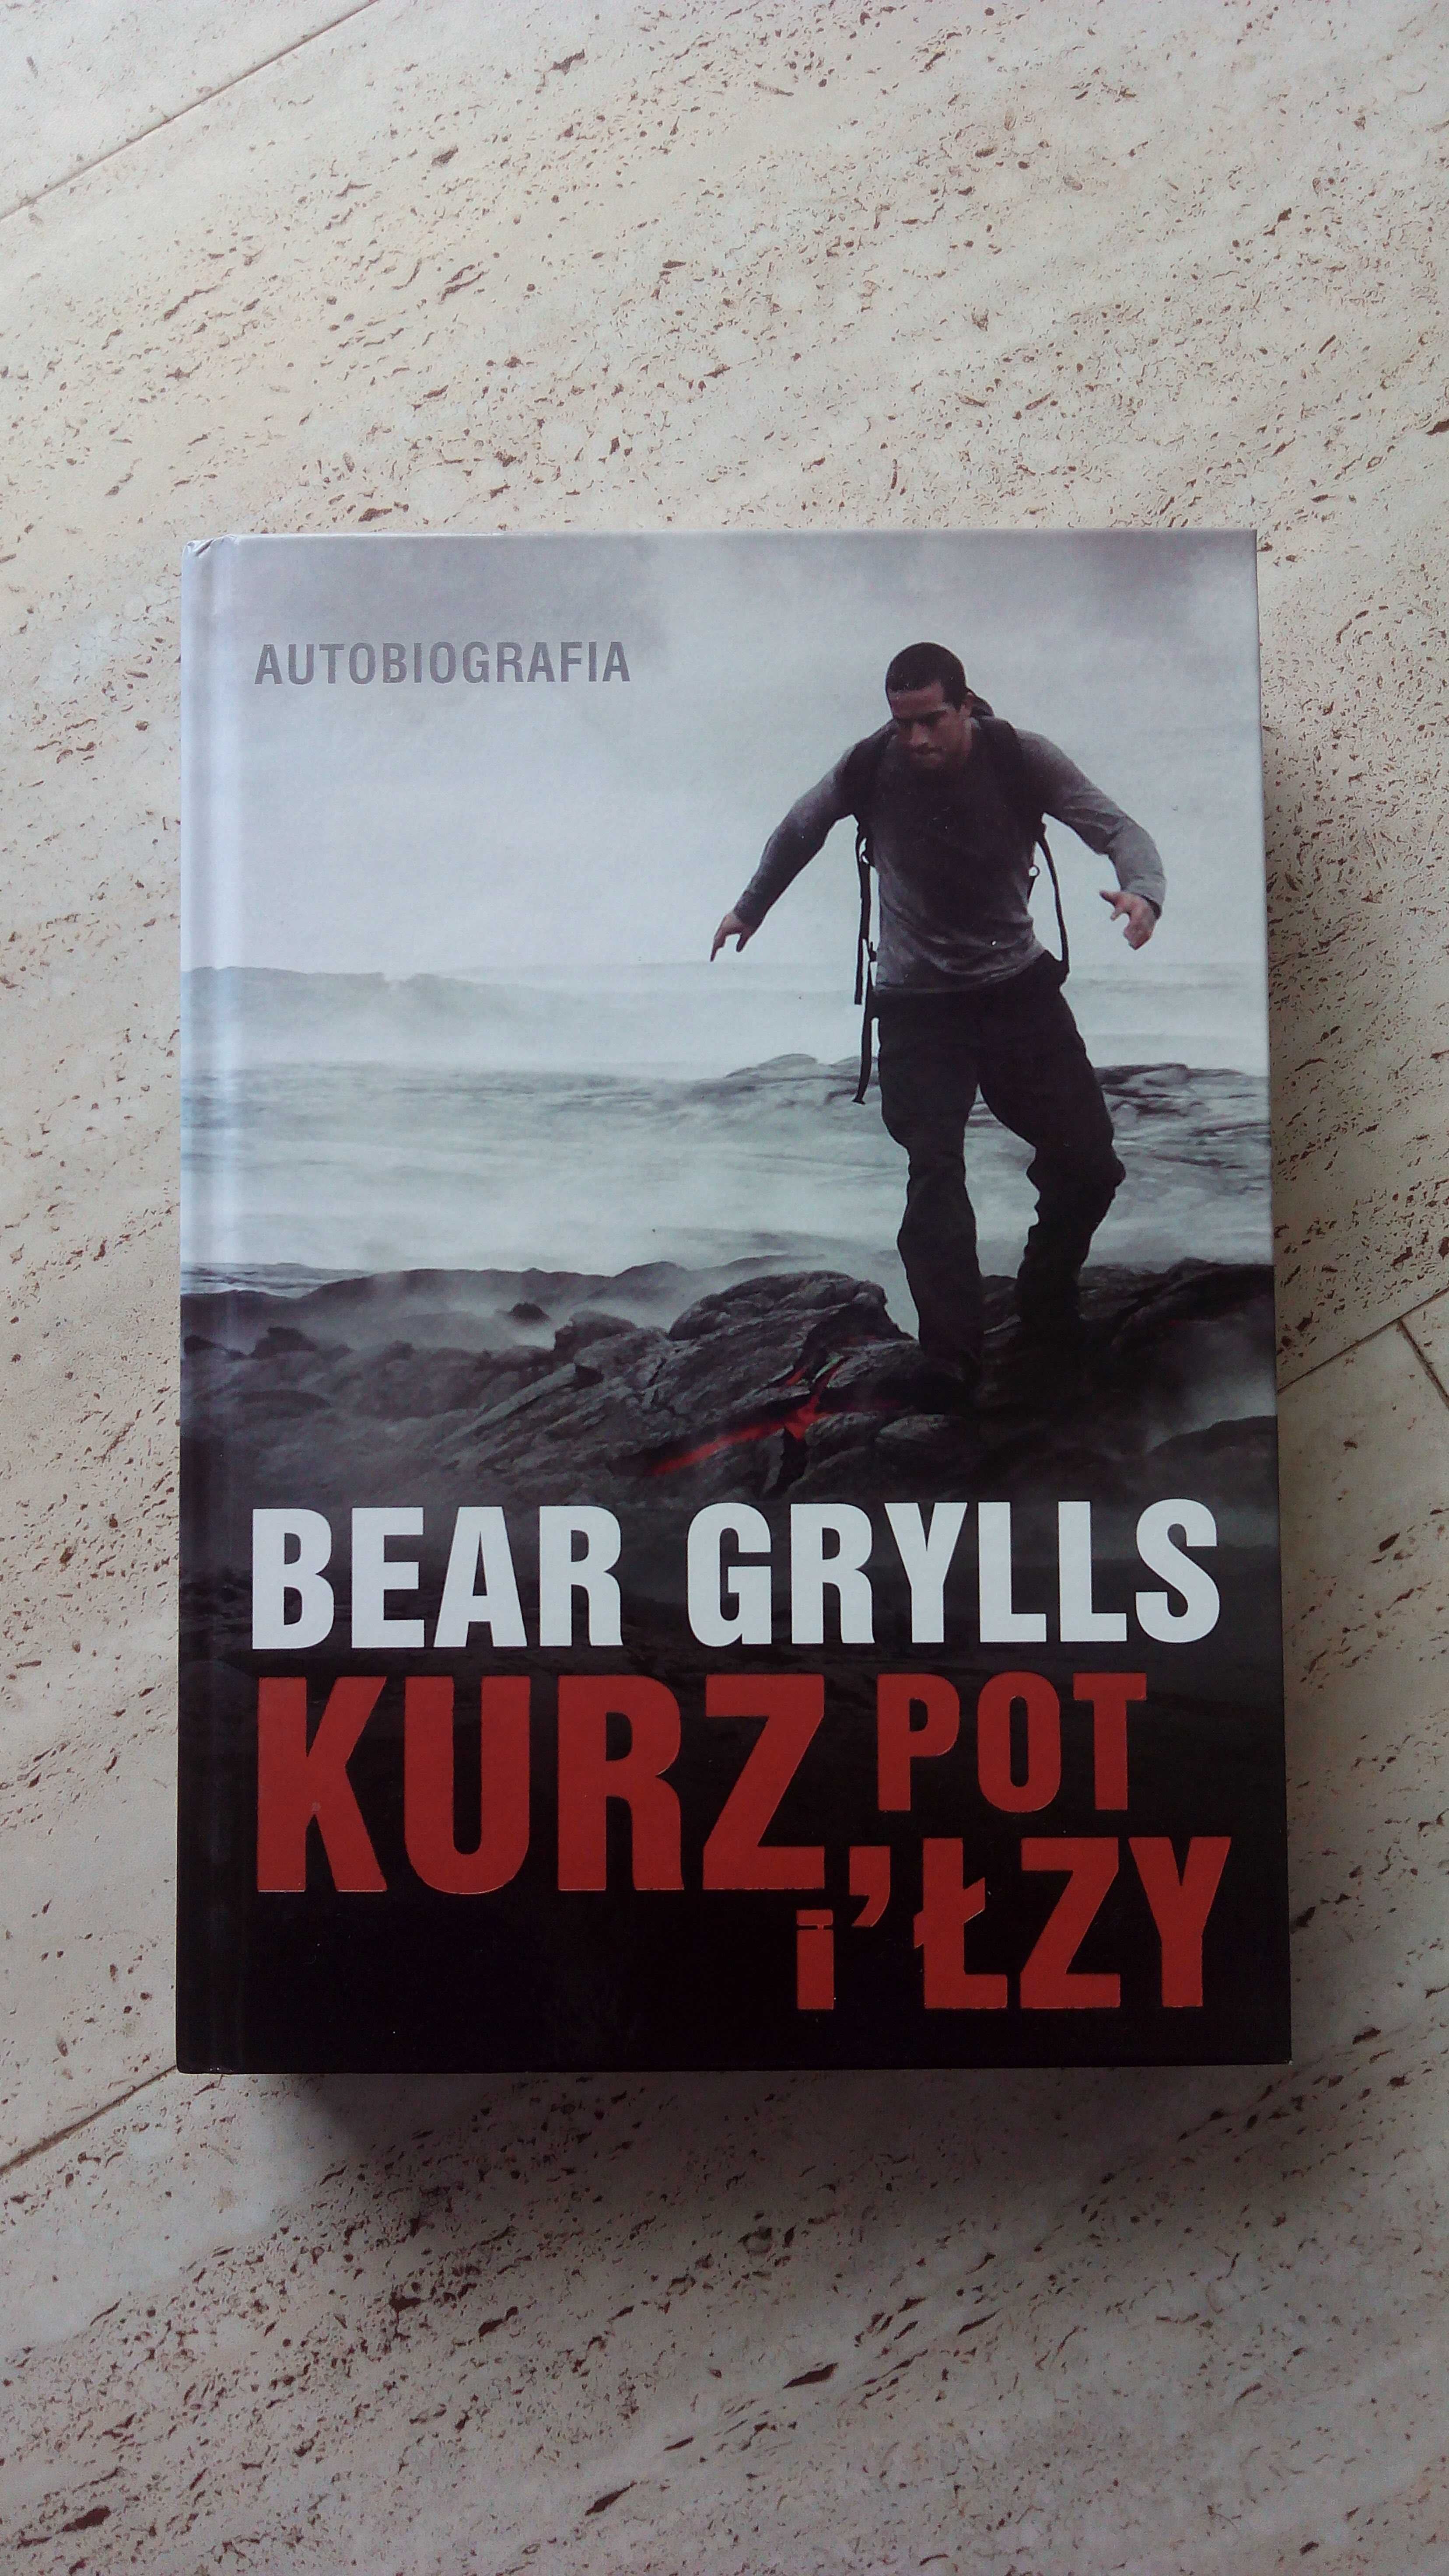 Kurz, pot i łzy - autobiografia Bear Grylls